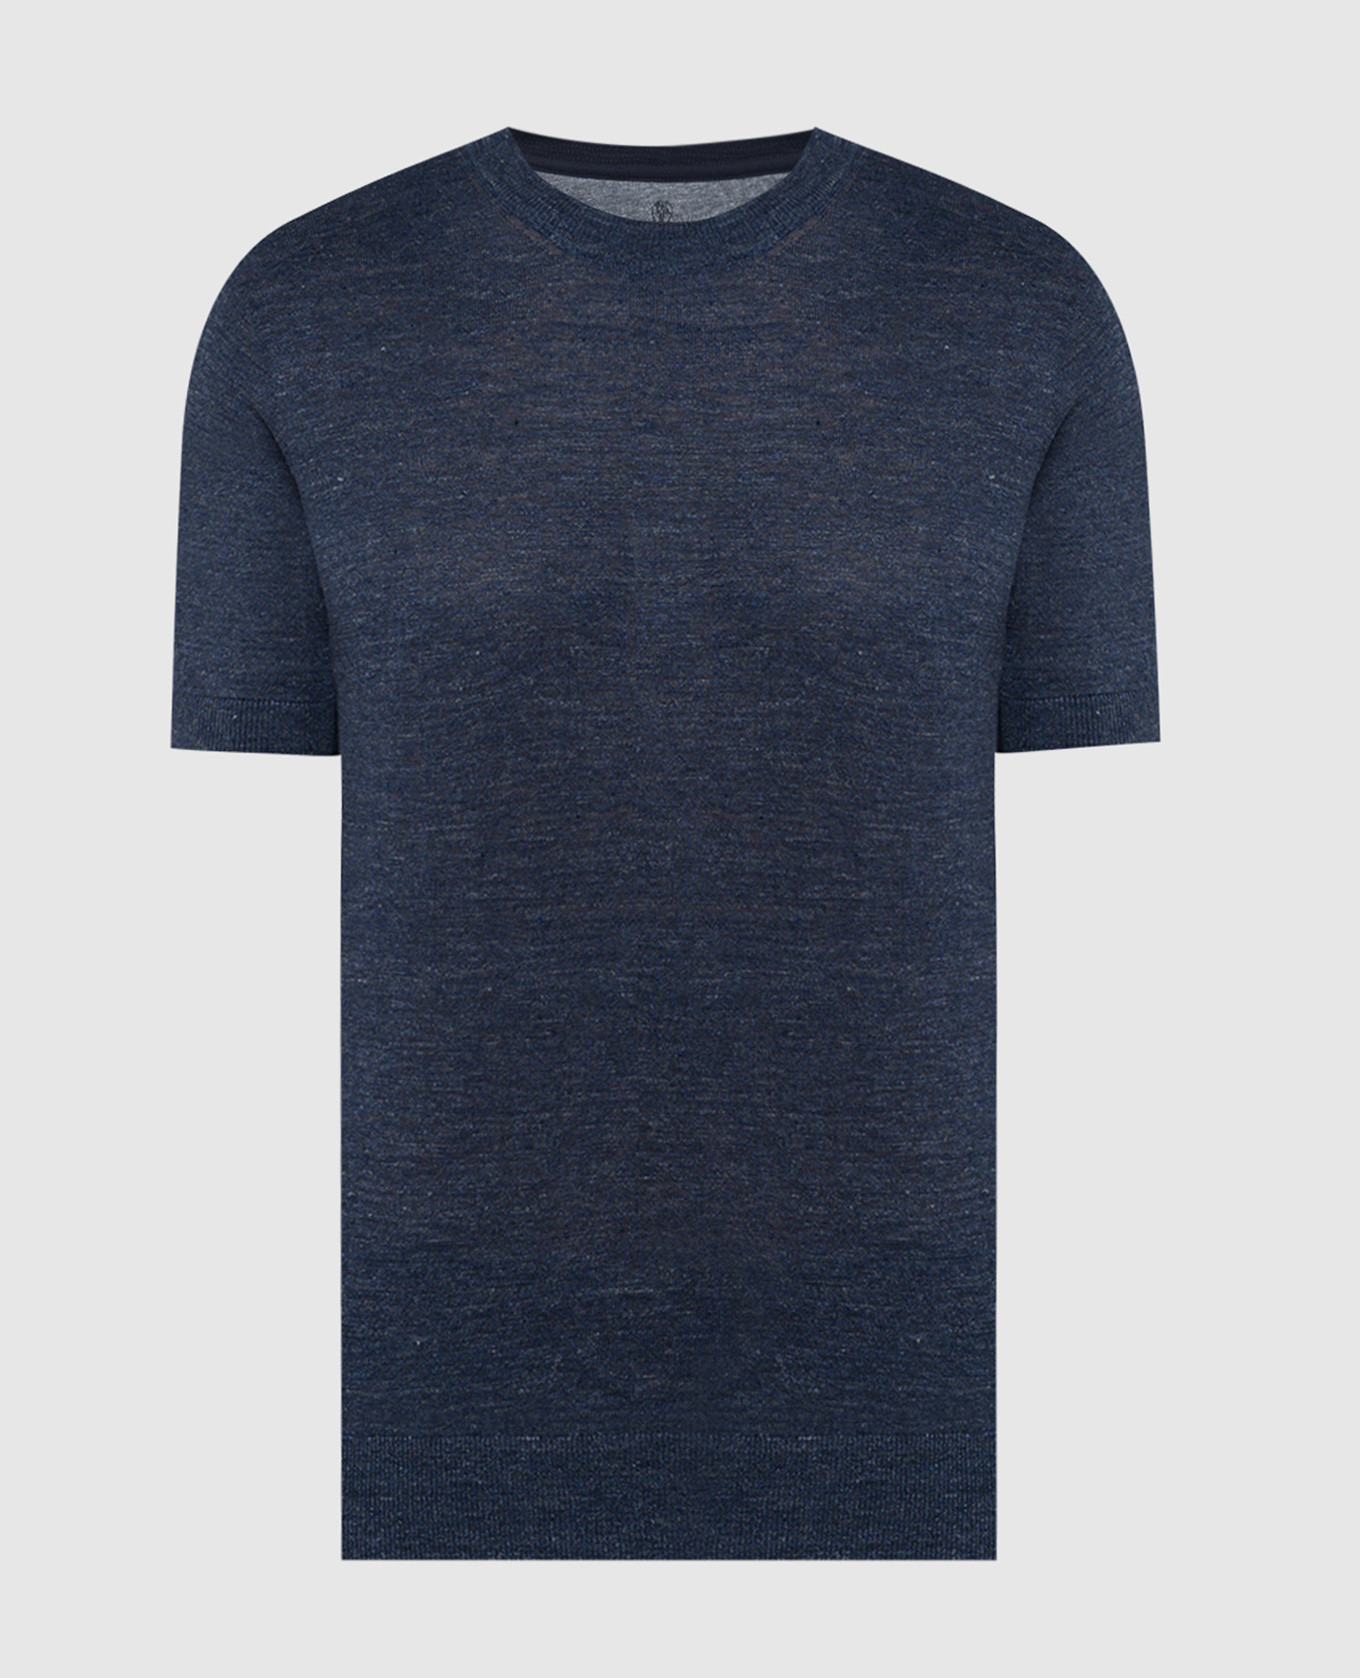 Blue melange t-shirt with linen